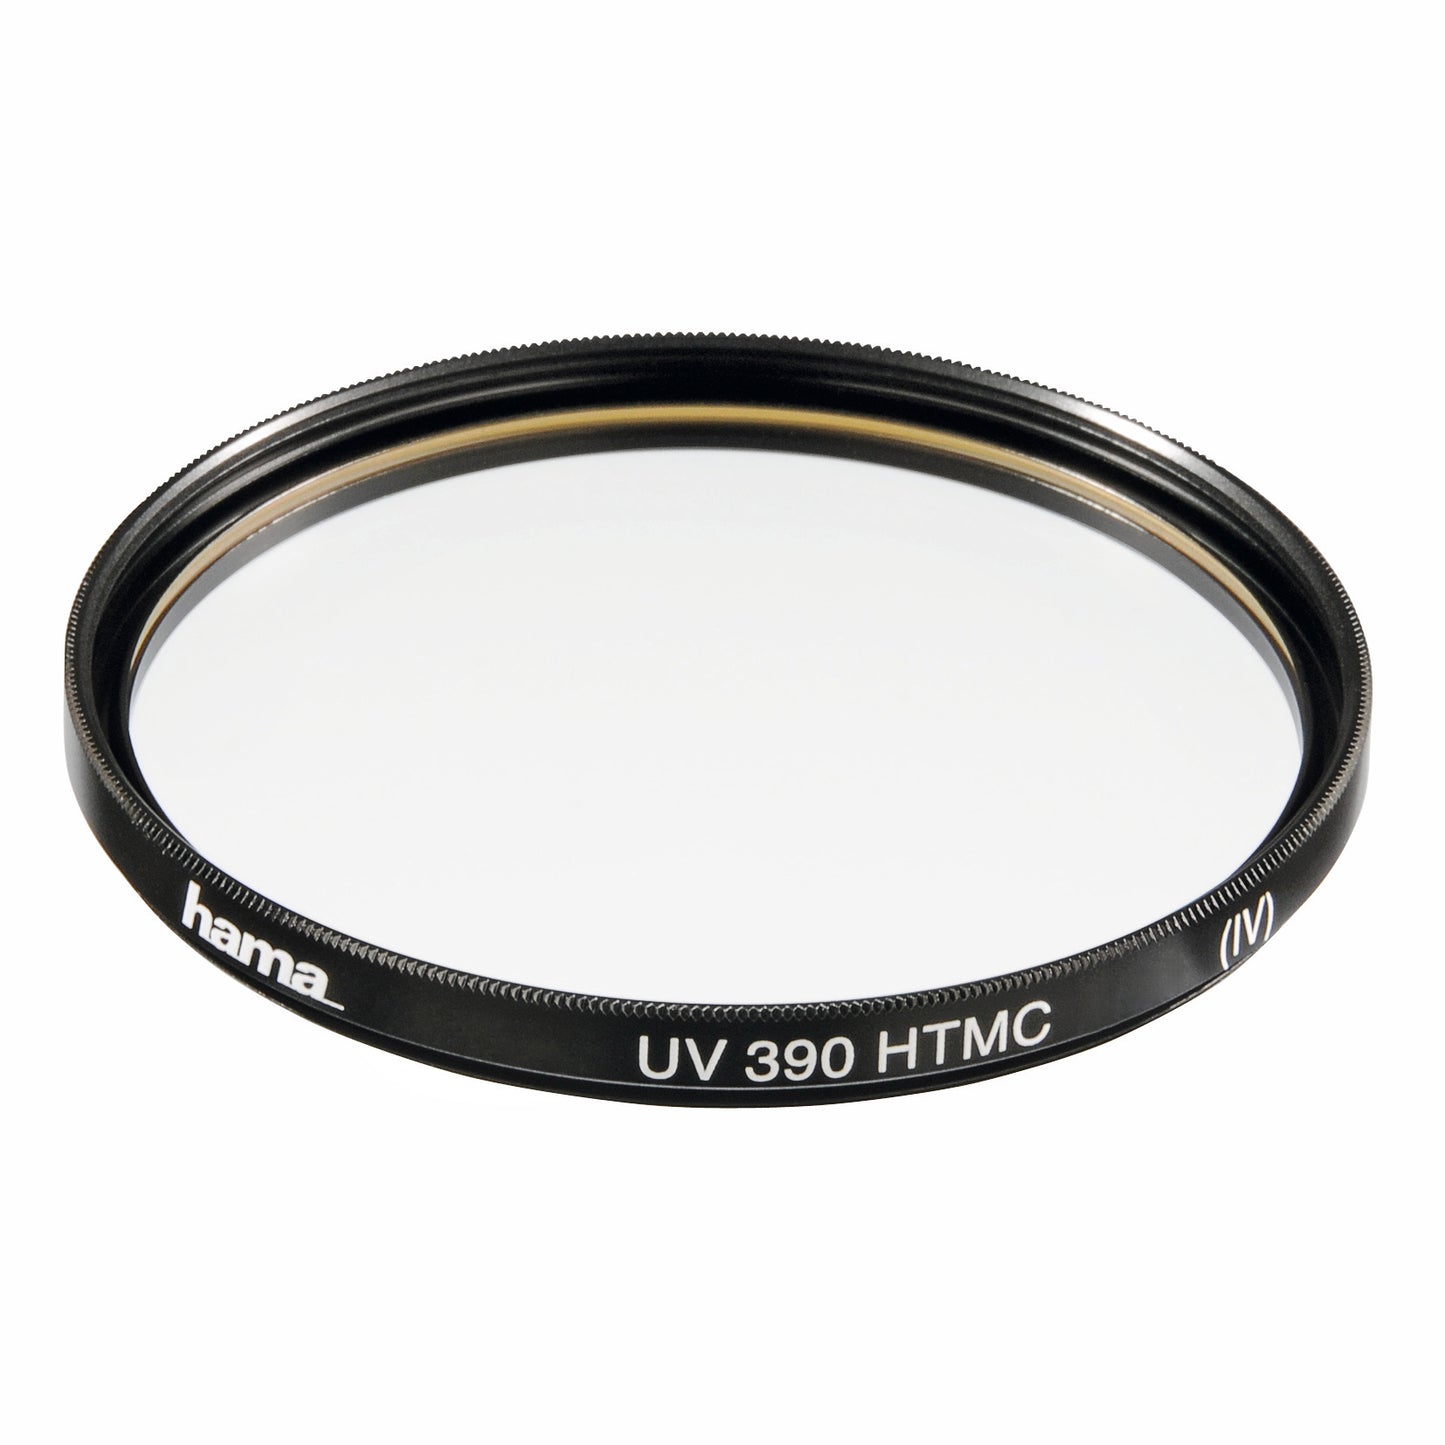 UV Filter 390, HTMC multi-coated, 58.0 mm